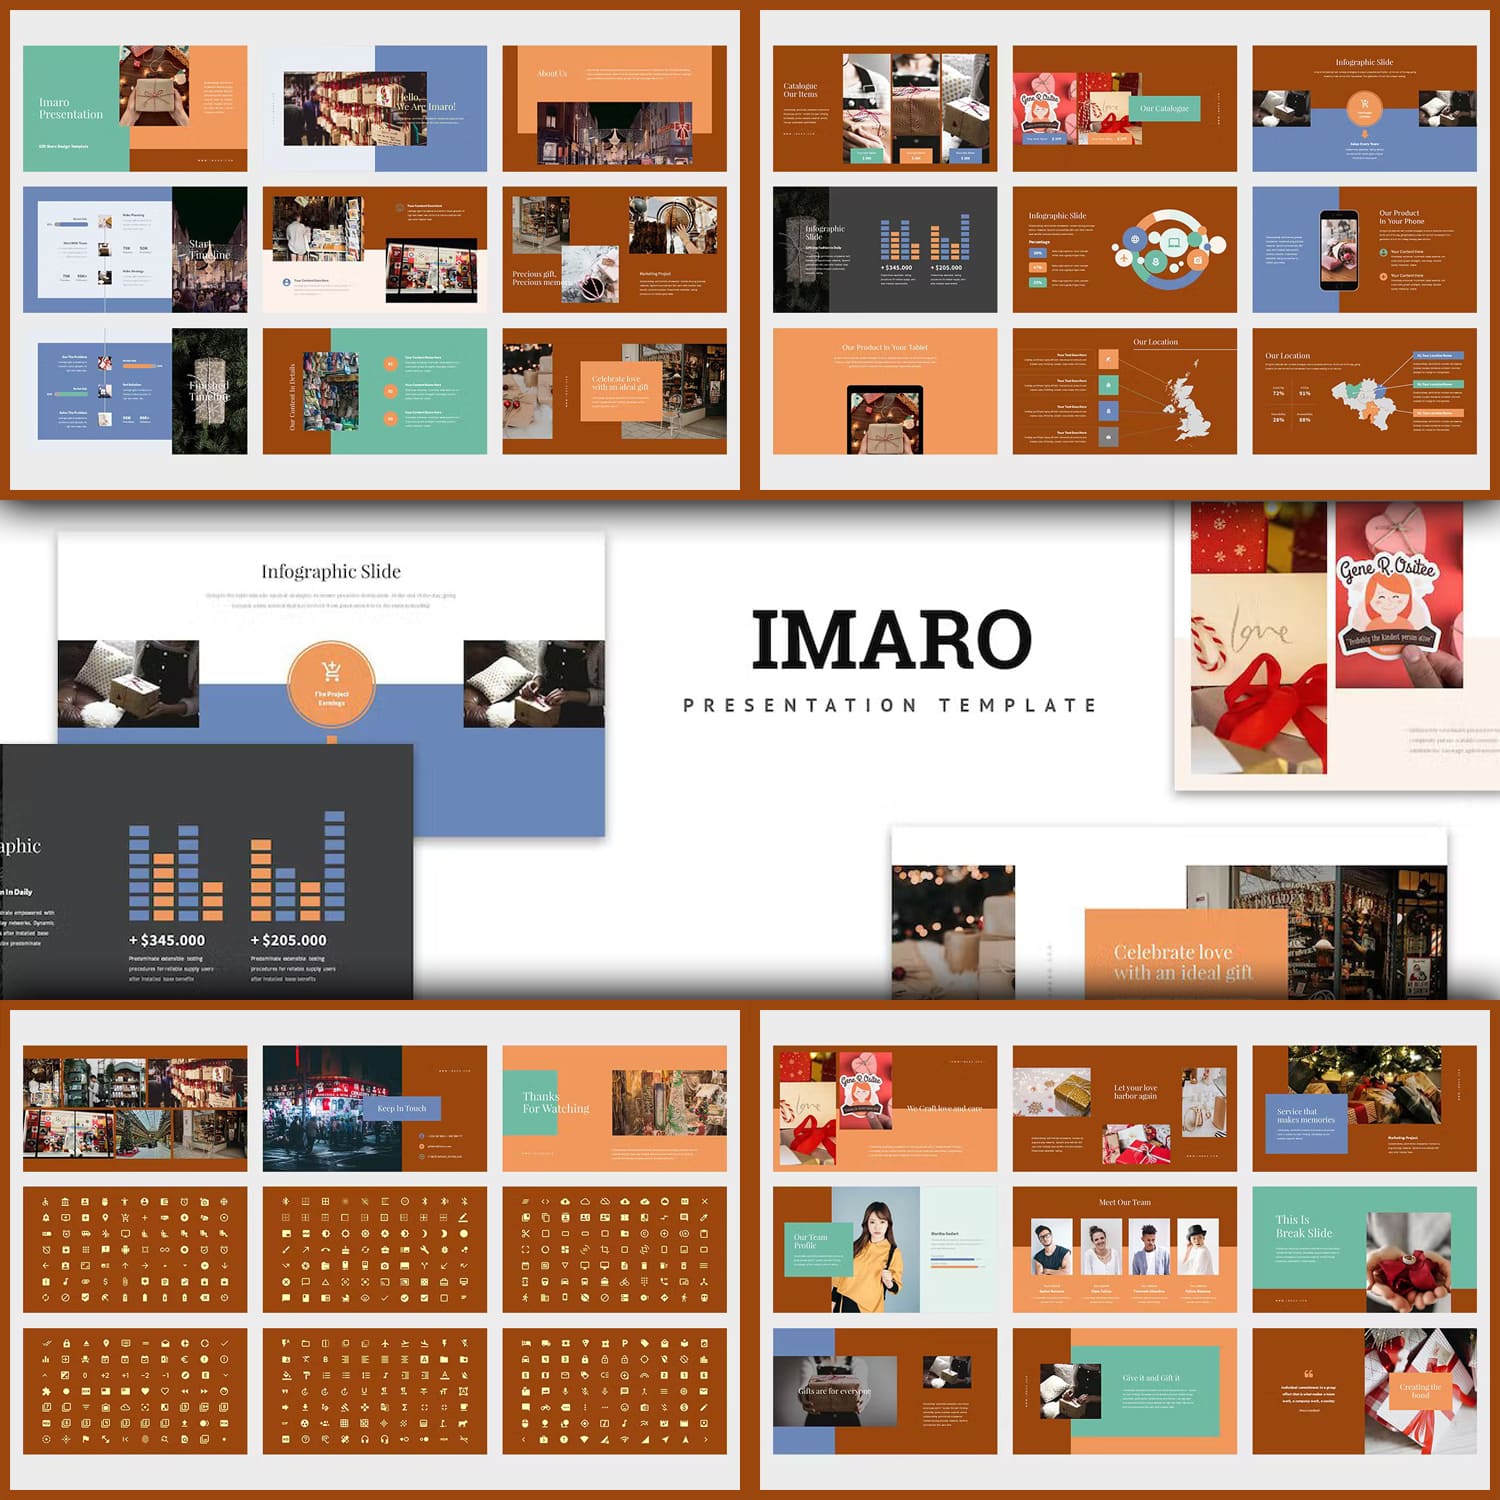 Imaro: Powerpointing Gift Box Cover.